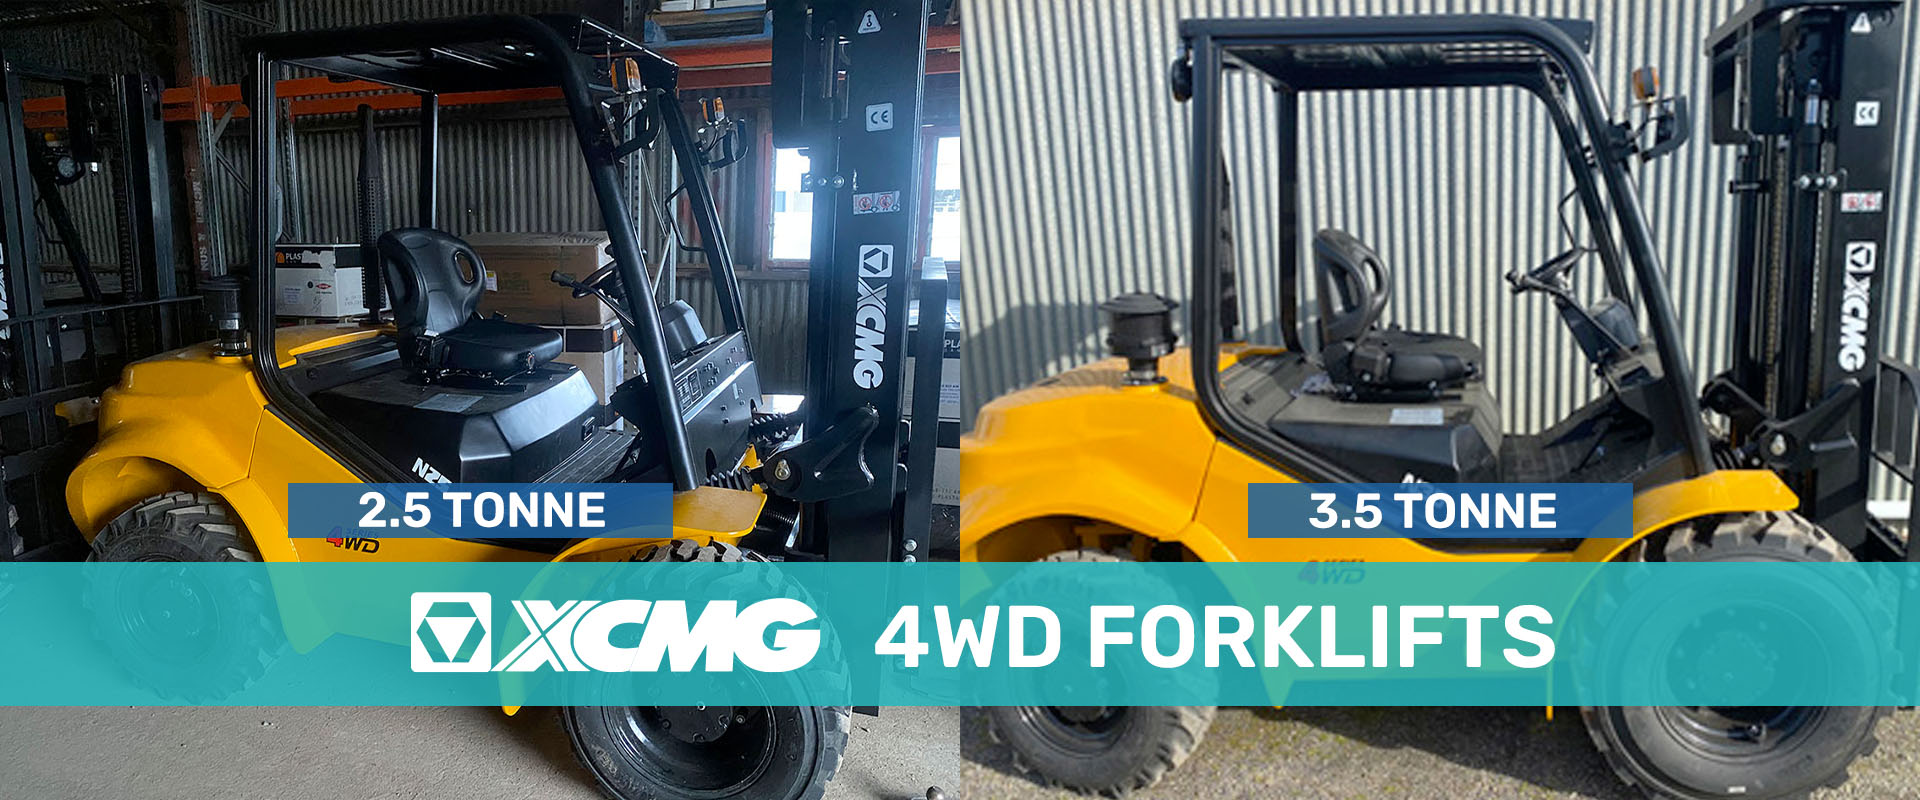 Carine's Merchandise - Slider - XCMG 4WD Forklifts